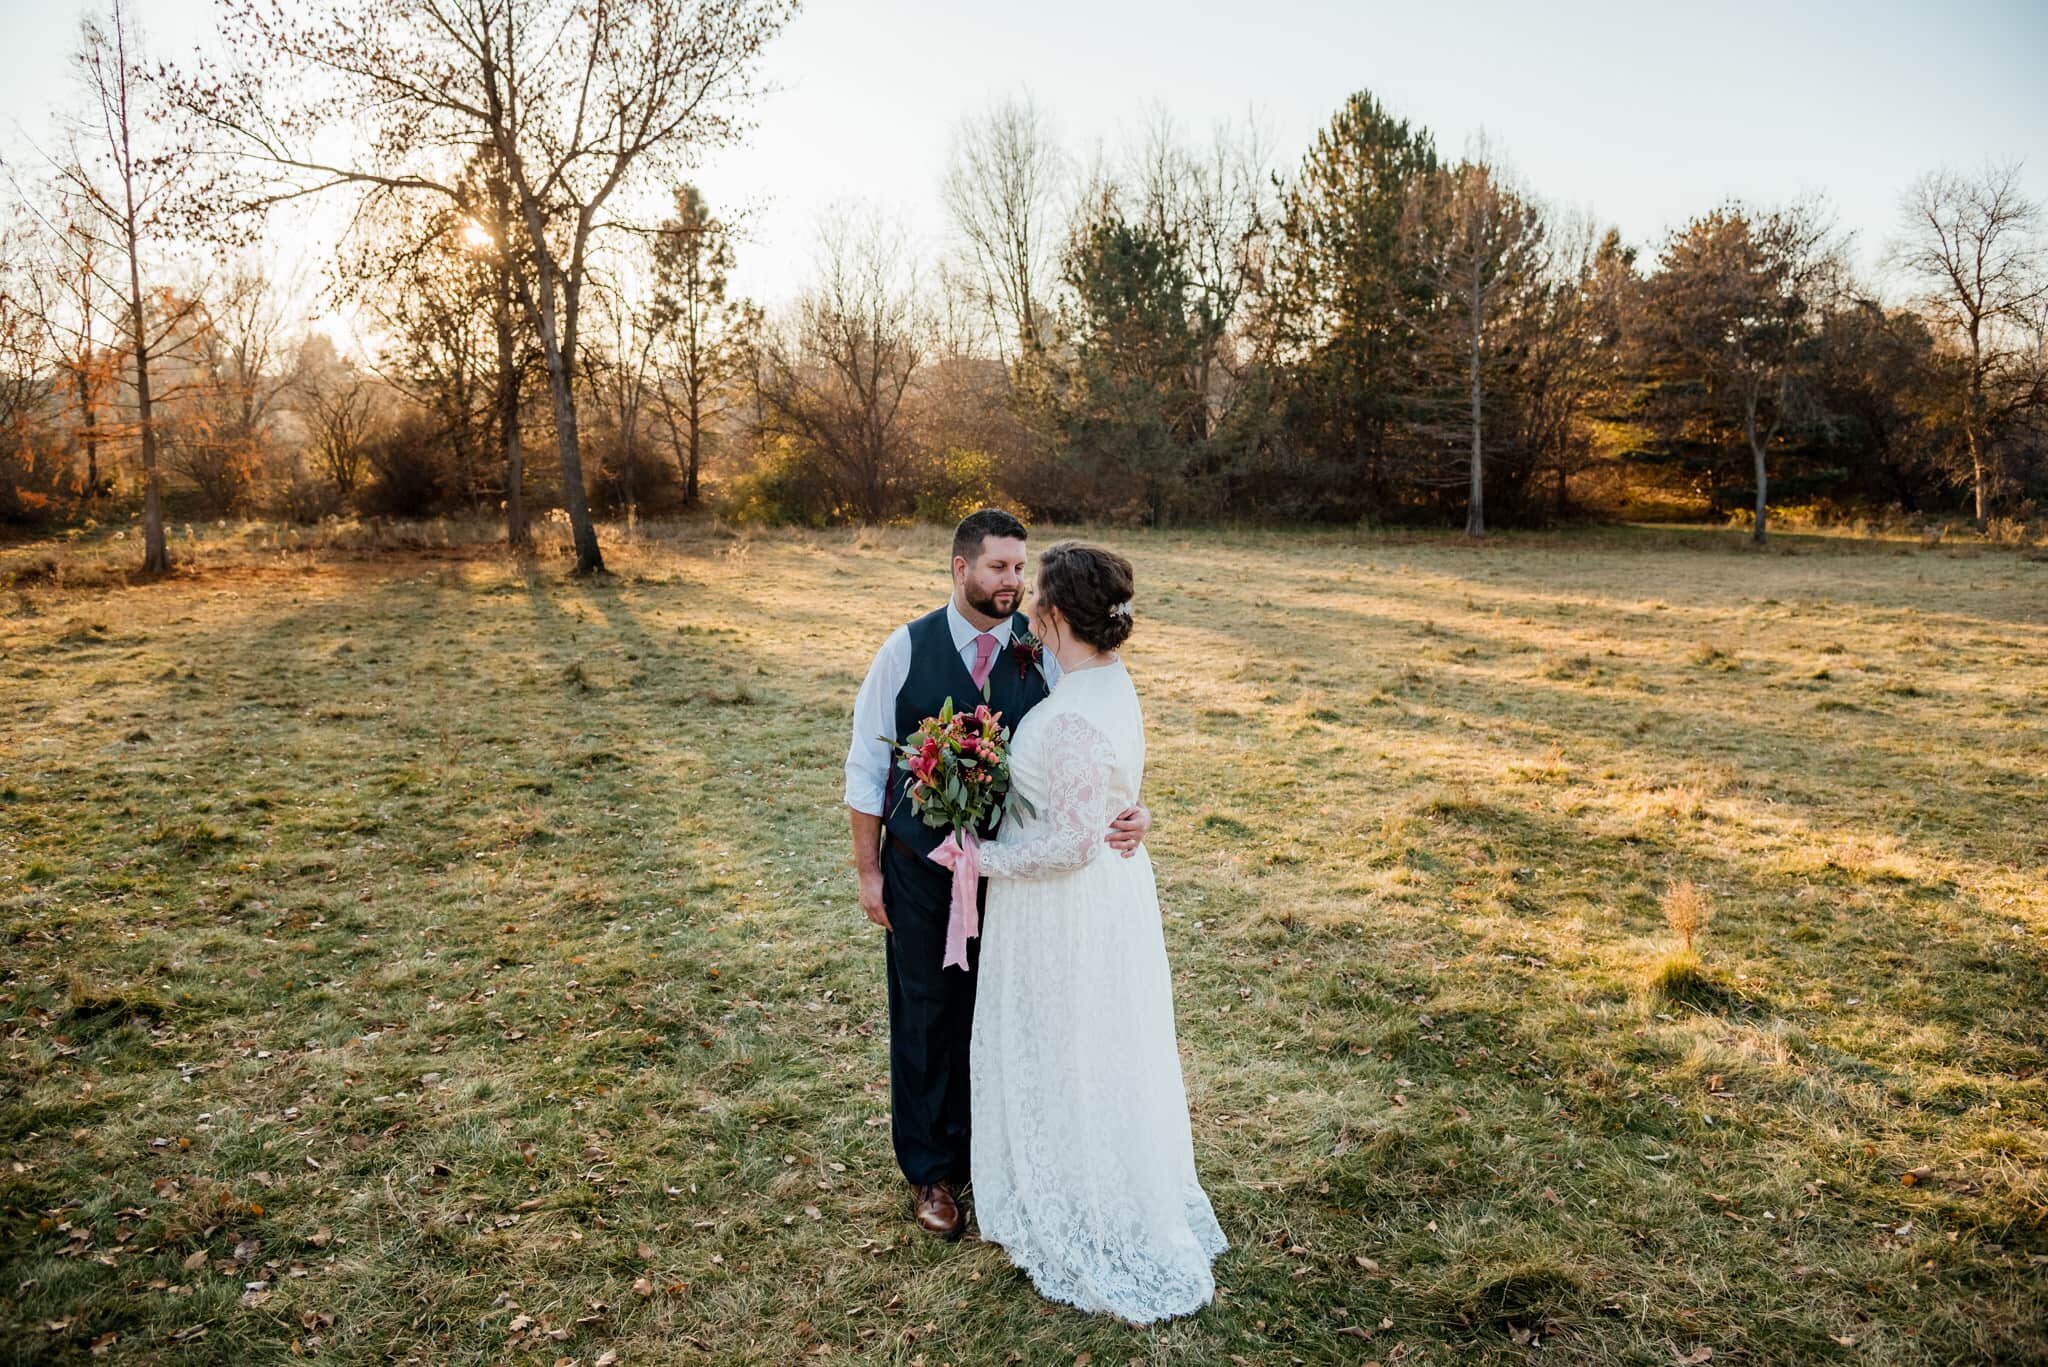 Zilla Photography - Simply Eloped Fall Wedding Boise Idaho Kathryn Albertson Park-14.jpg